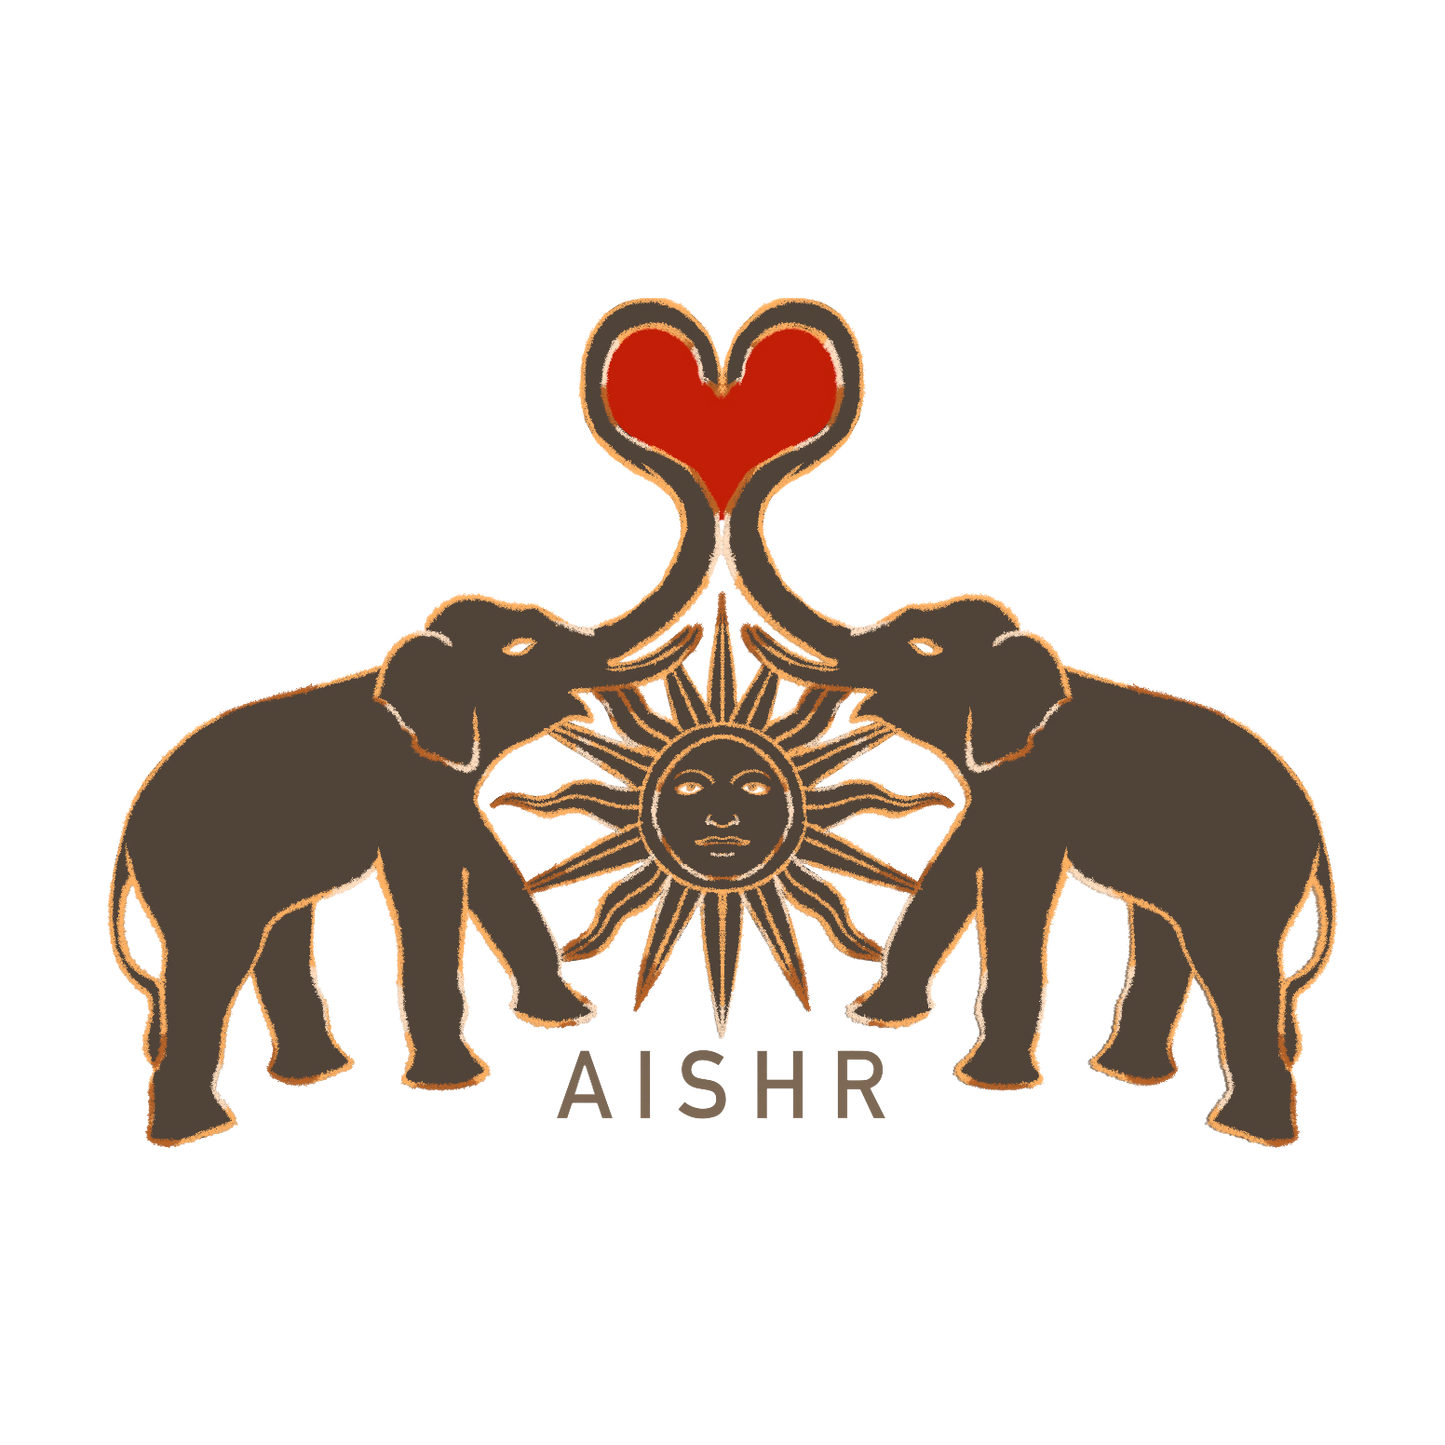 Aishr Original Illustration for Commercial use